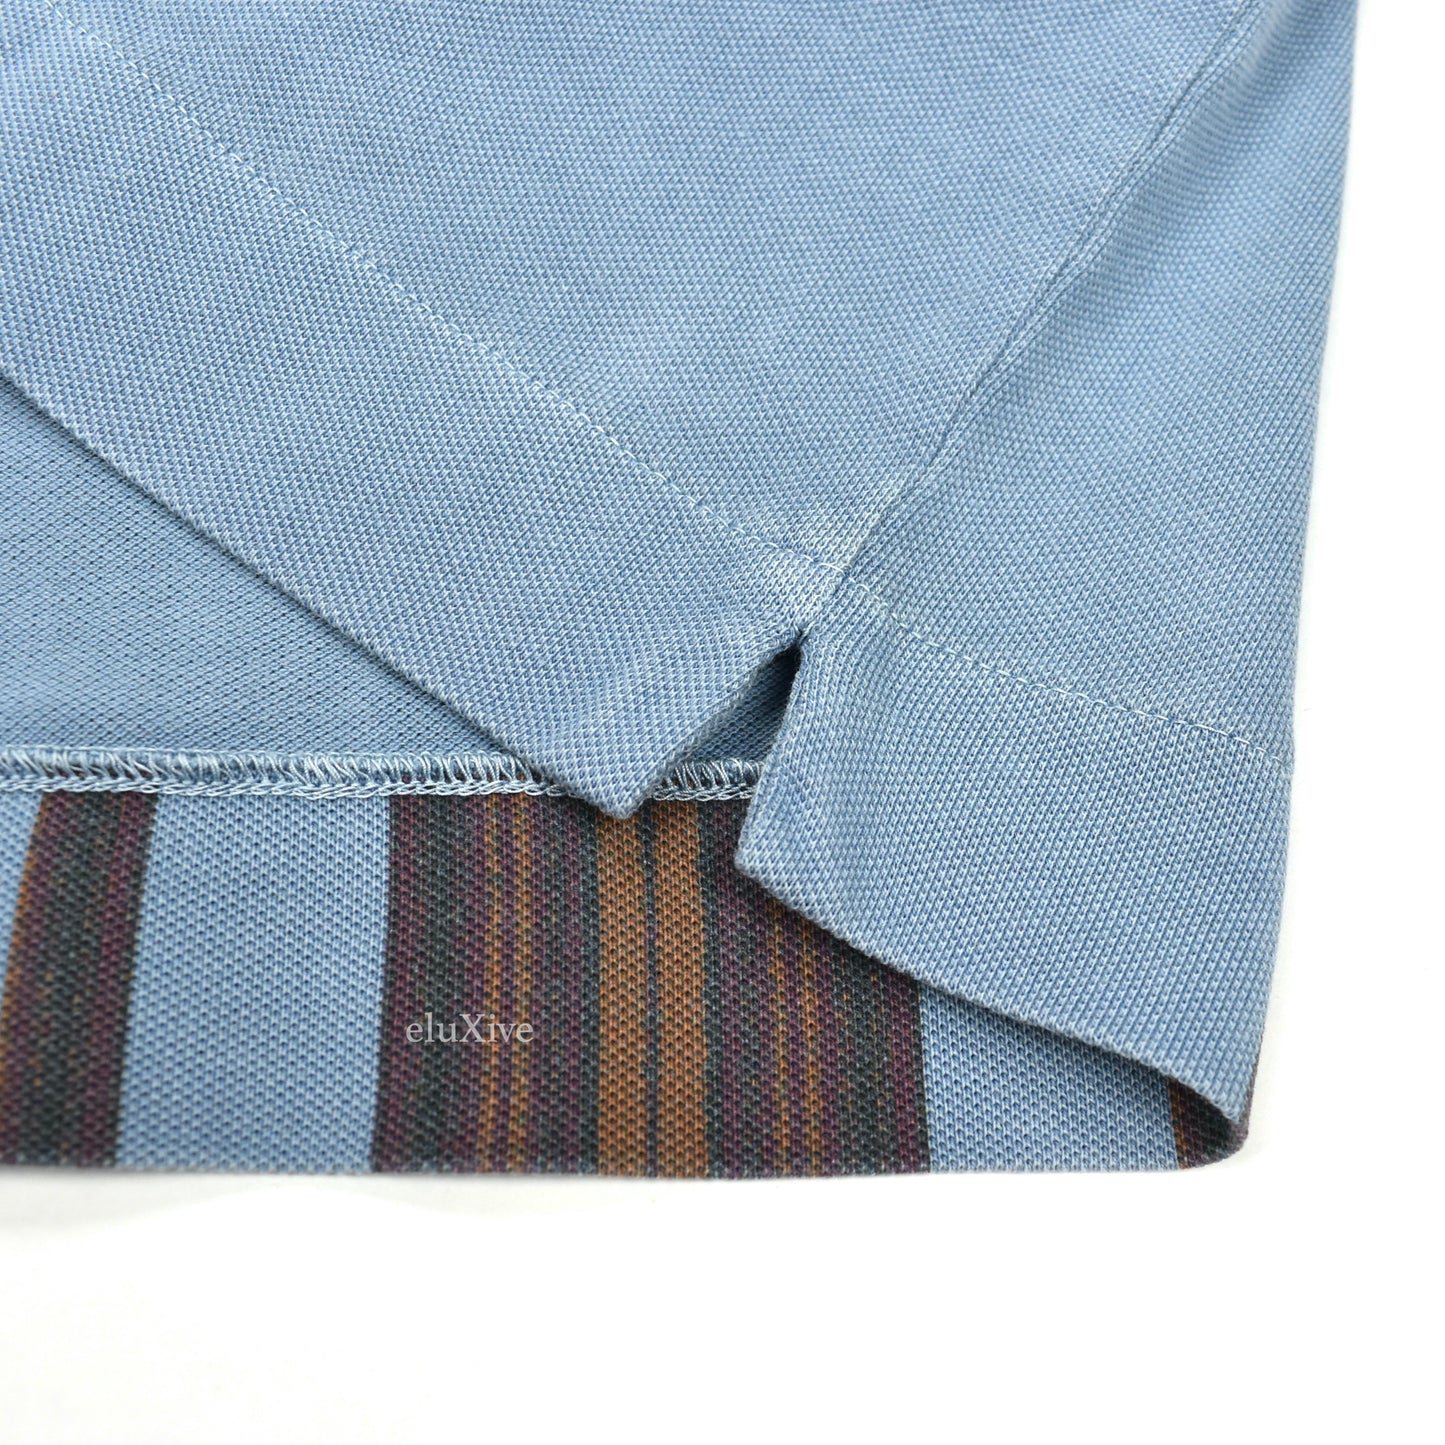 Boglioli - Slate Blue Vertical Stripe Polo Shirt